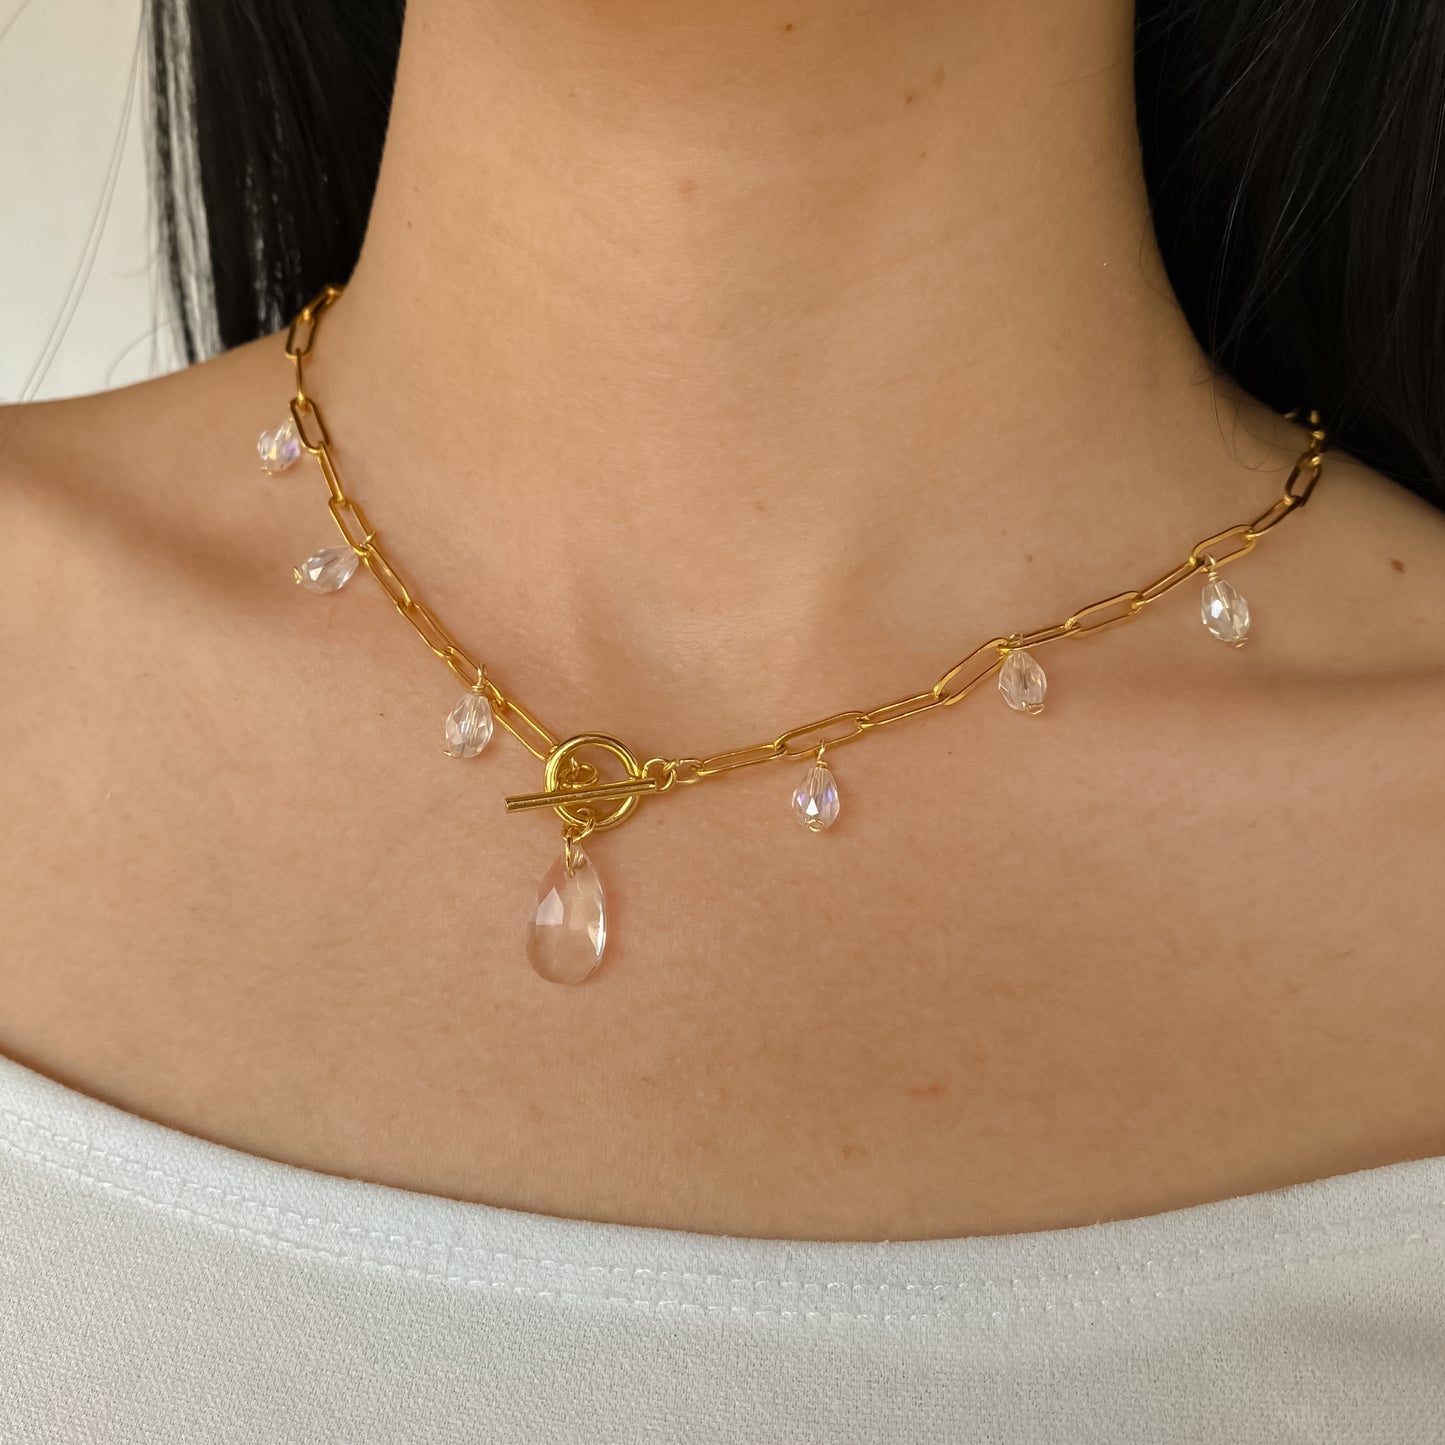 Llorona necklace